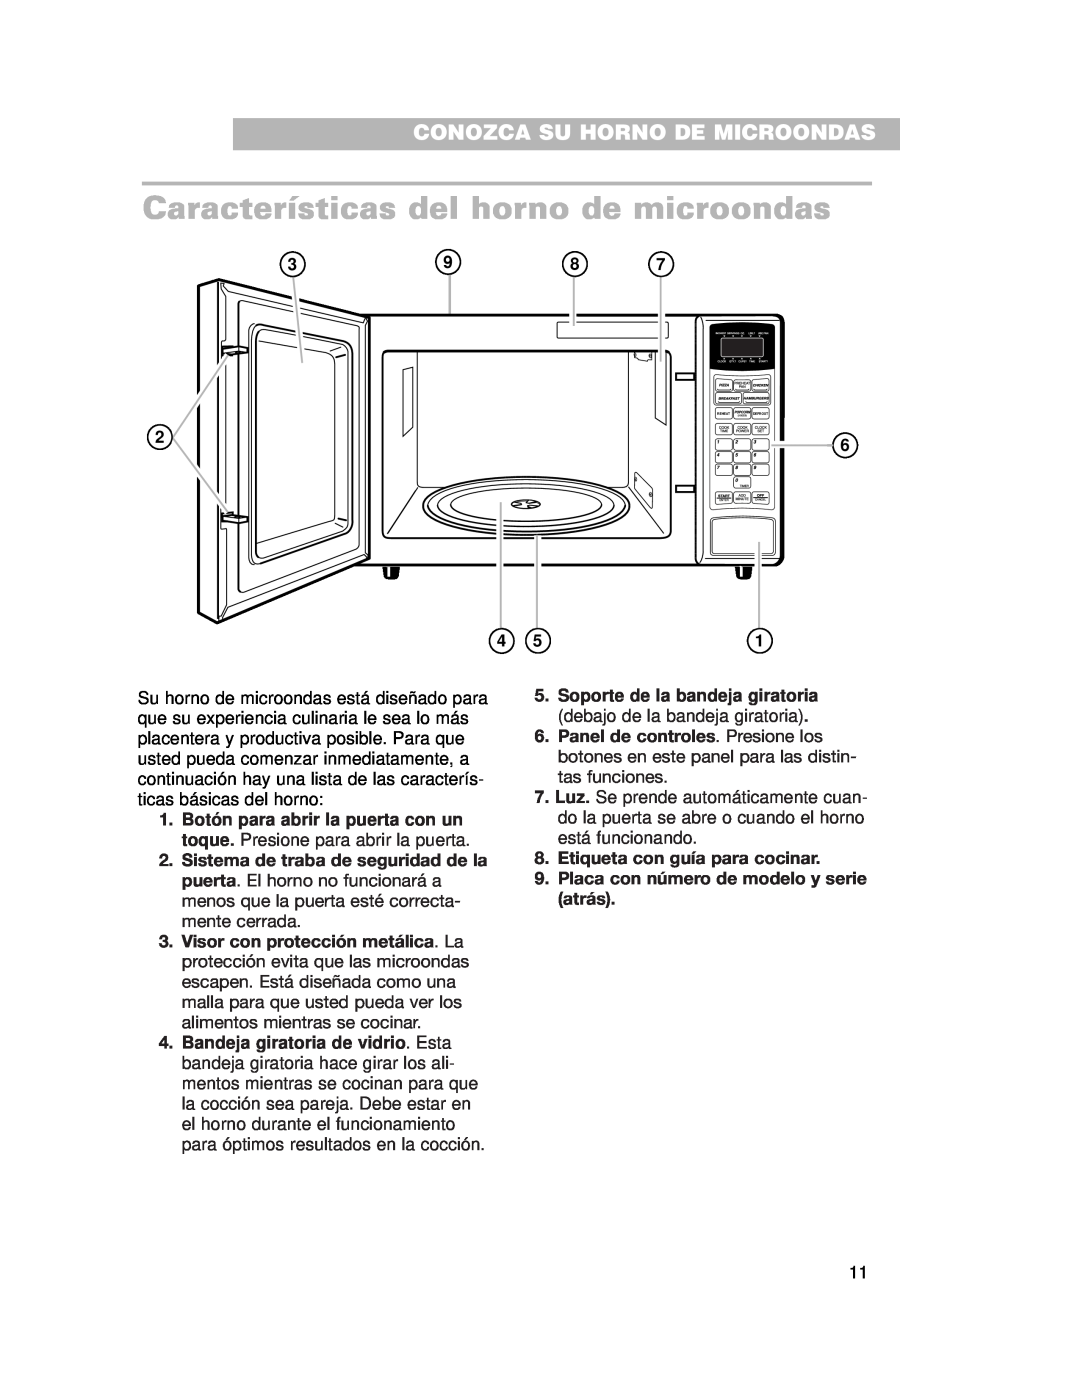 Whirlpool CMT102SG Características del horno de microondas, Etiqueta con guía para cocinar, Conozca Su Horno De Microondas 